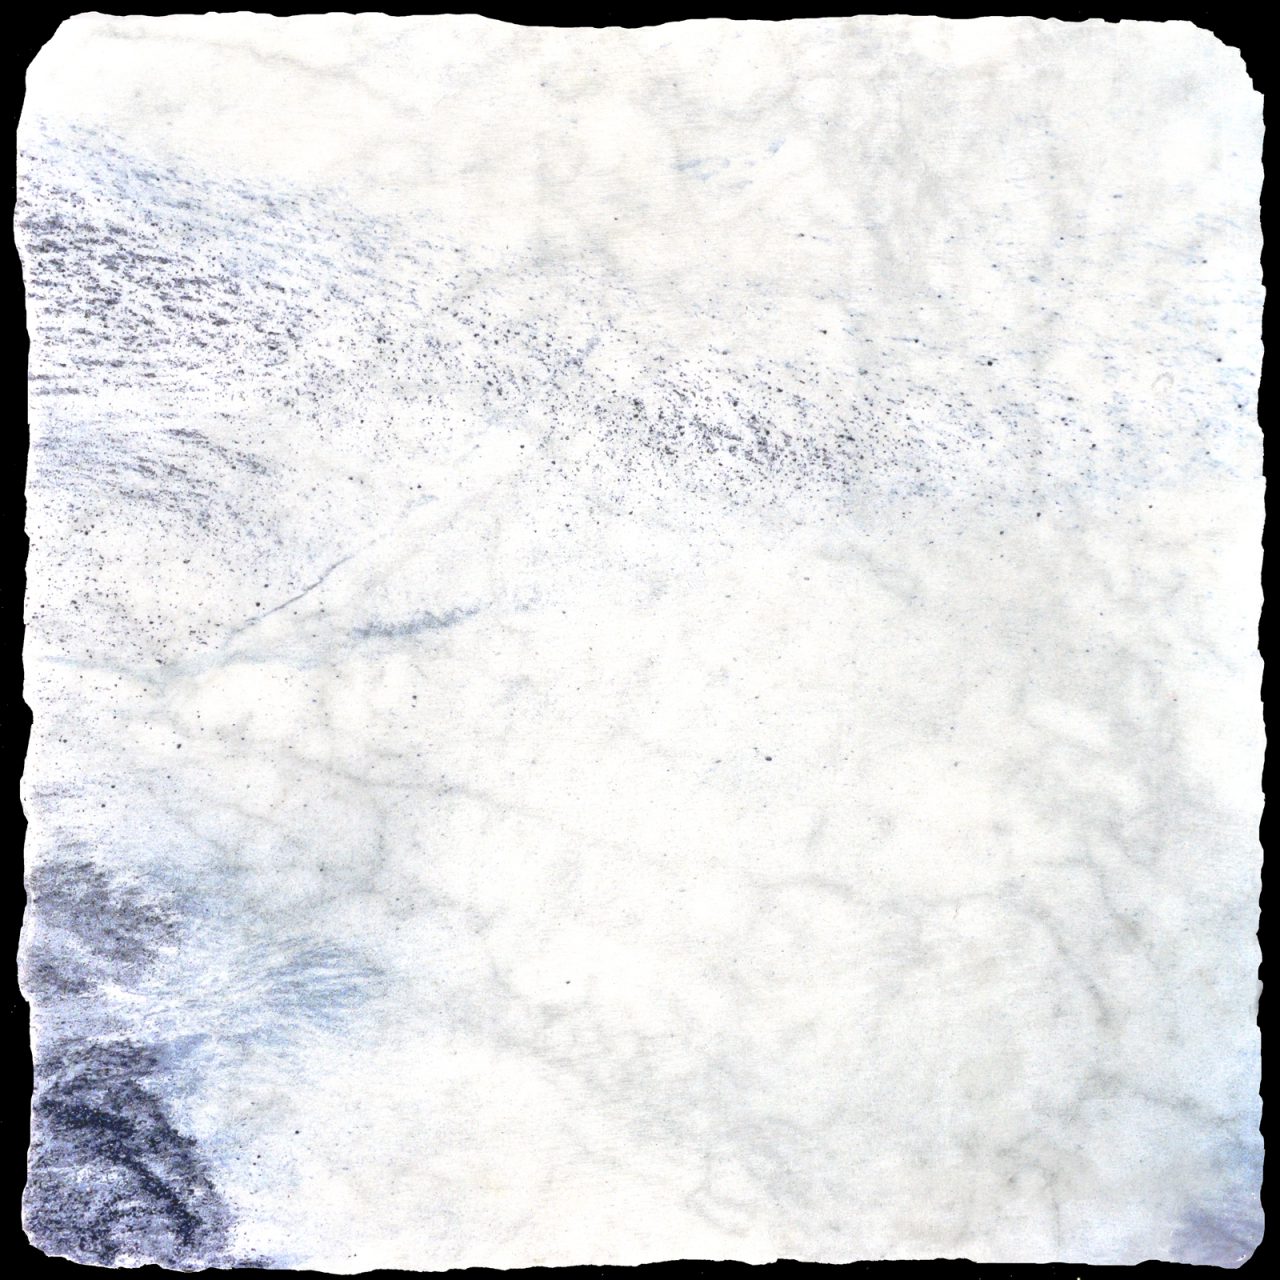 Toxic Craters VIII, Indonesia 2019, laser prints on Italian Carrara marble, 60,5 x 59 cm